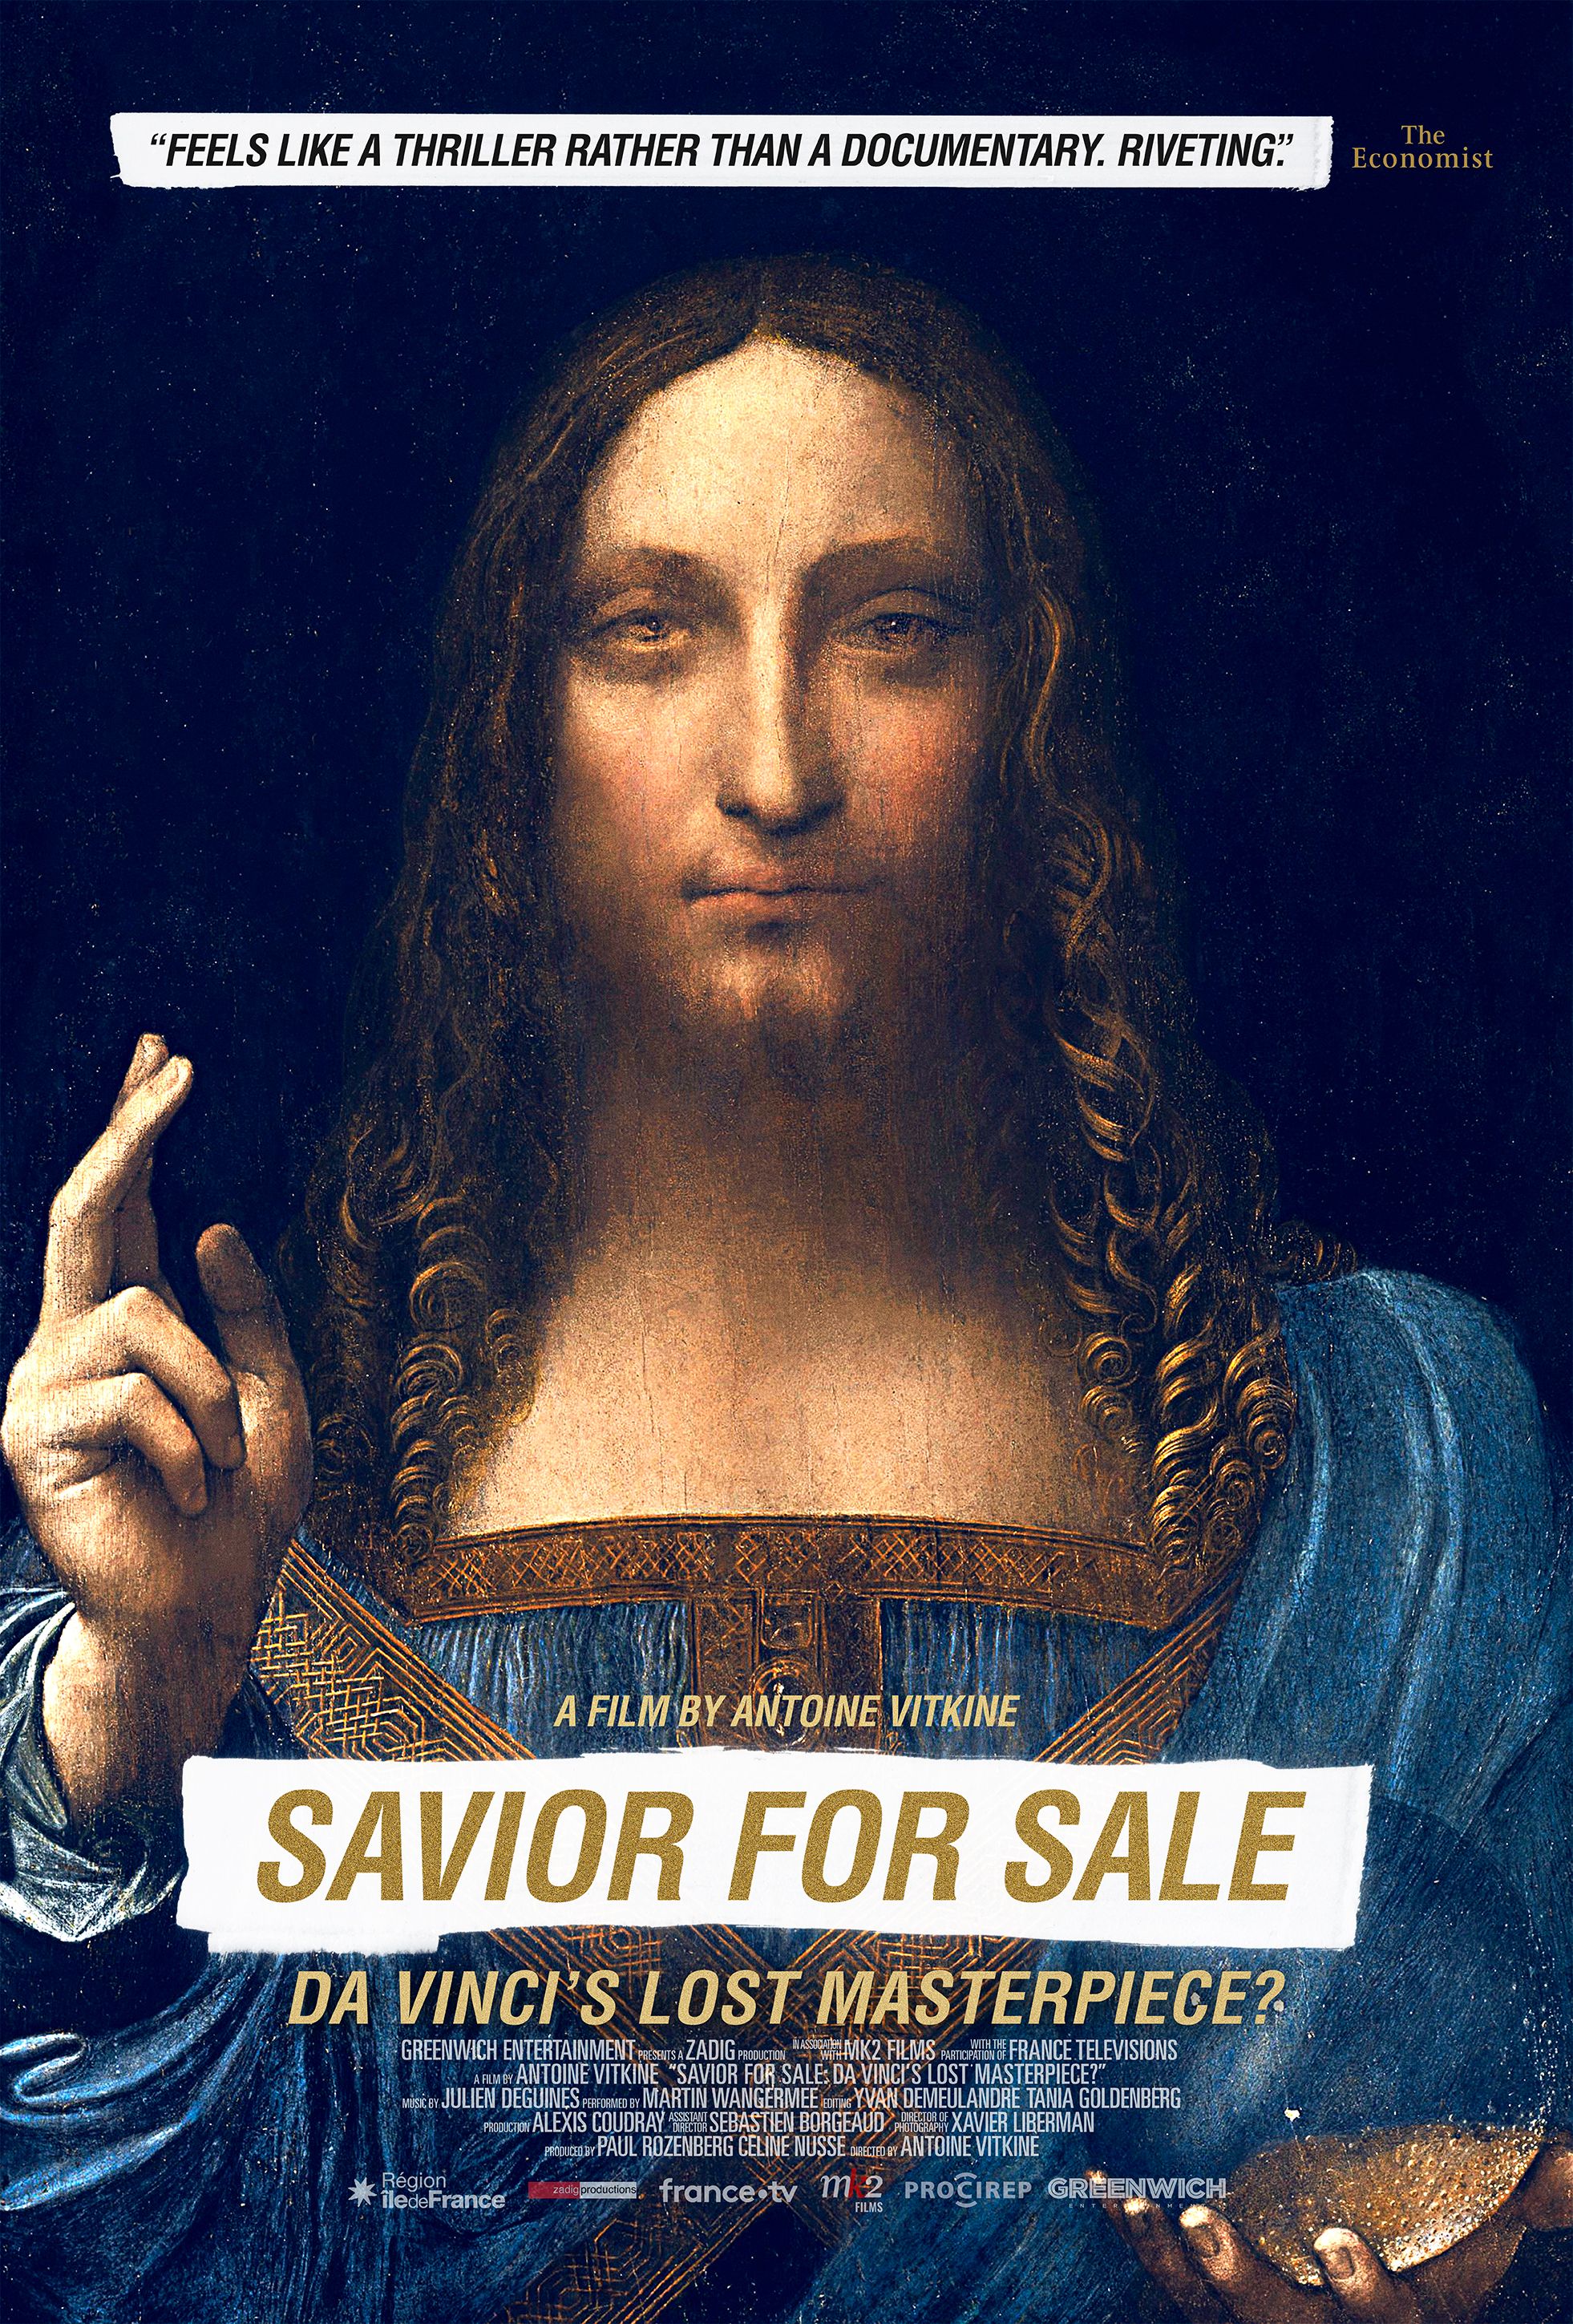 The Savior For Sale: The Story of Salvator Mundi